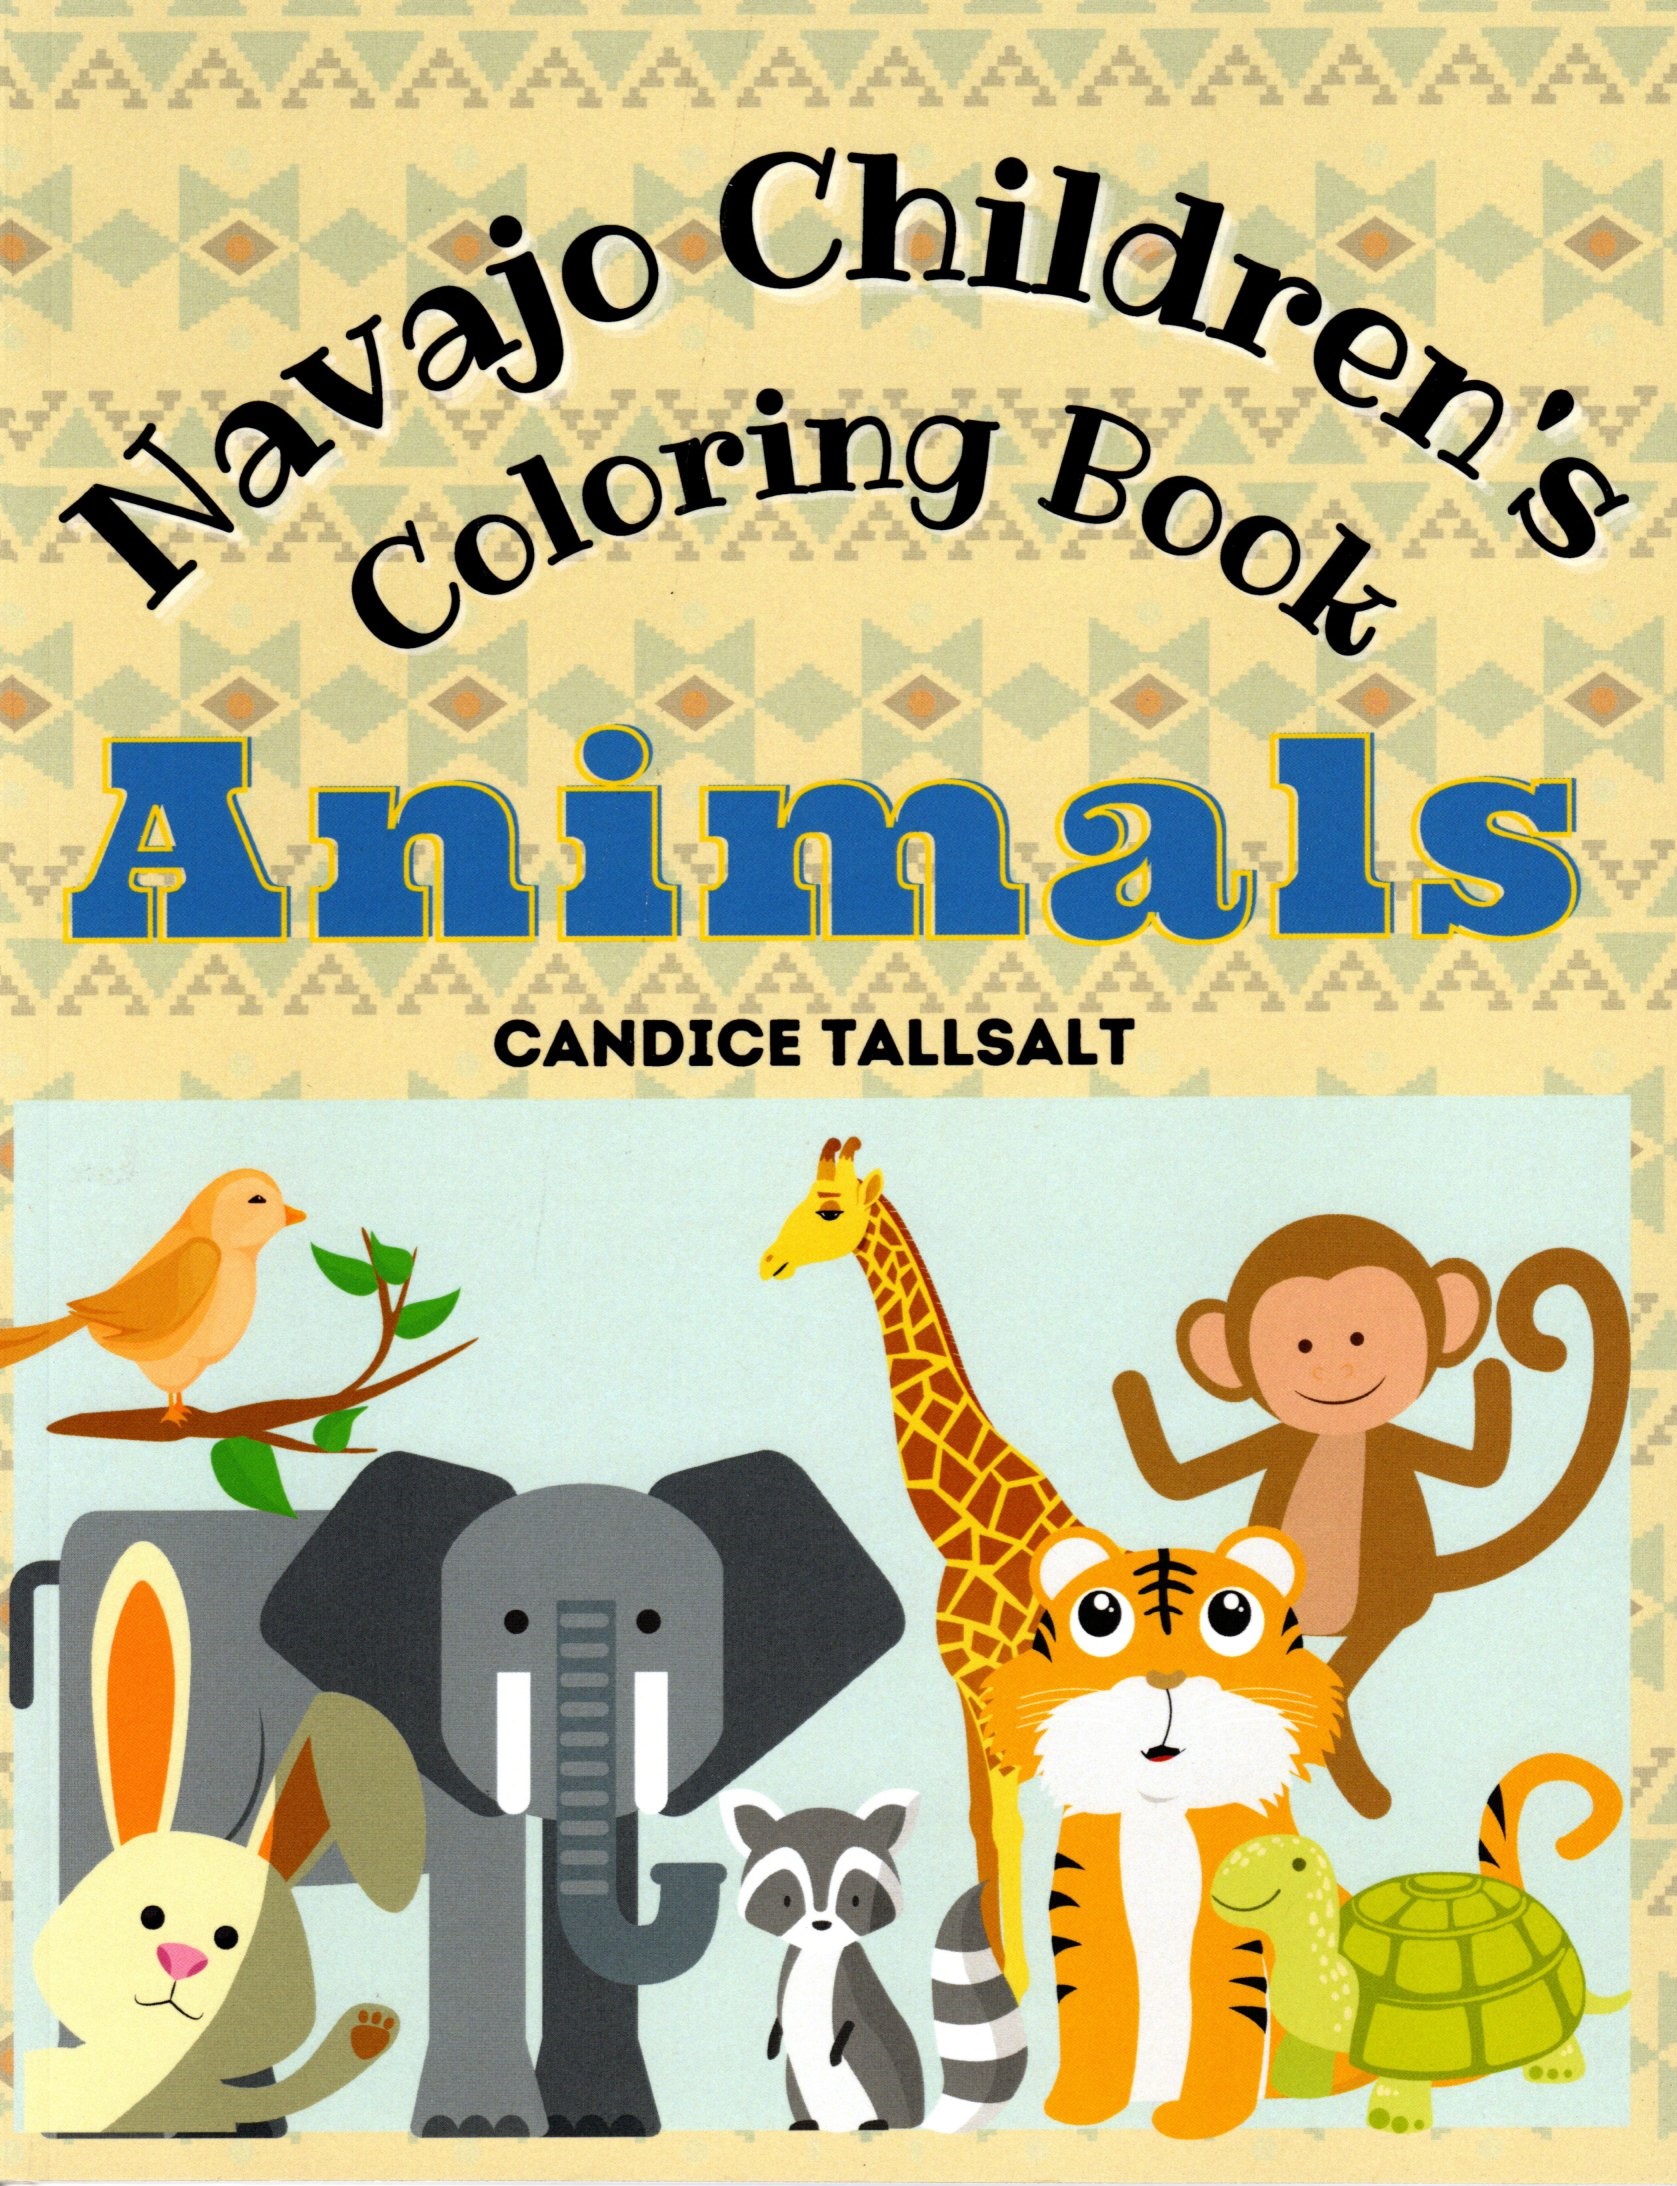 Navajo childrens coloring book